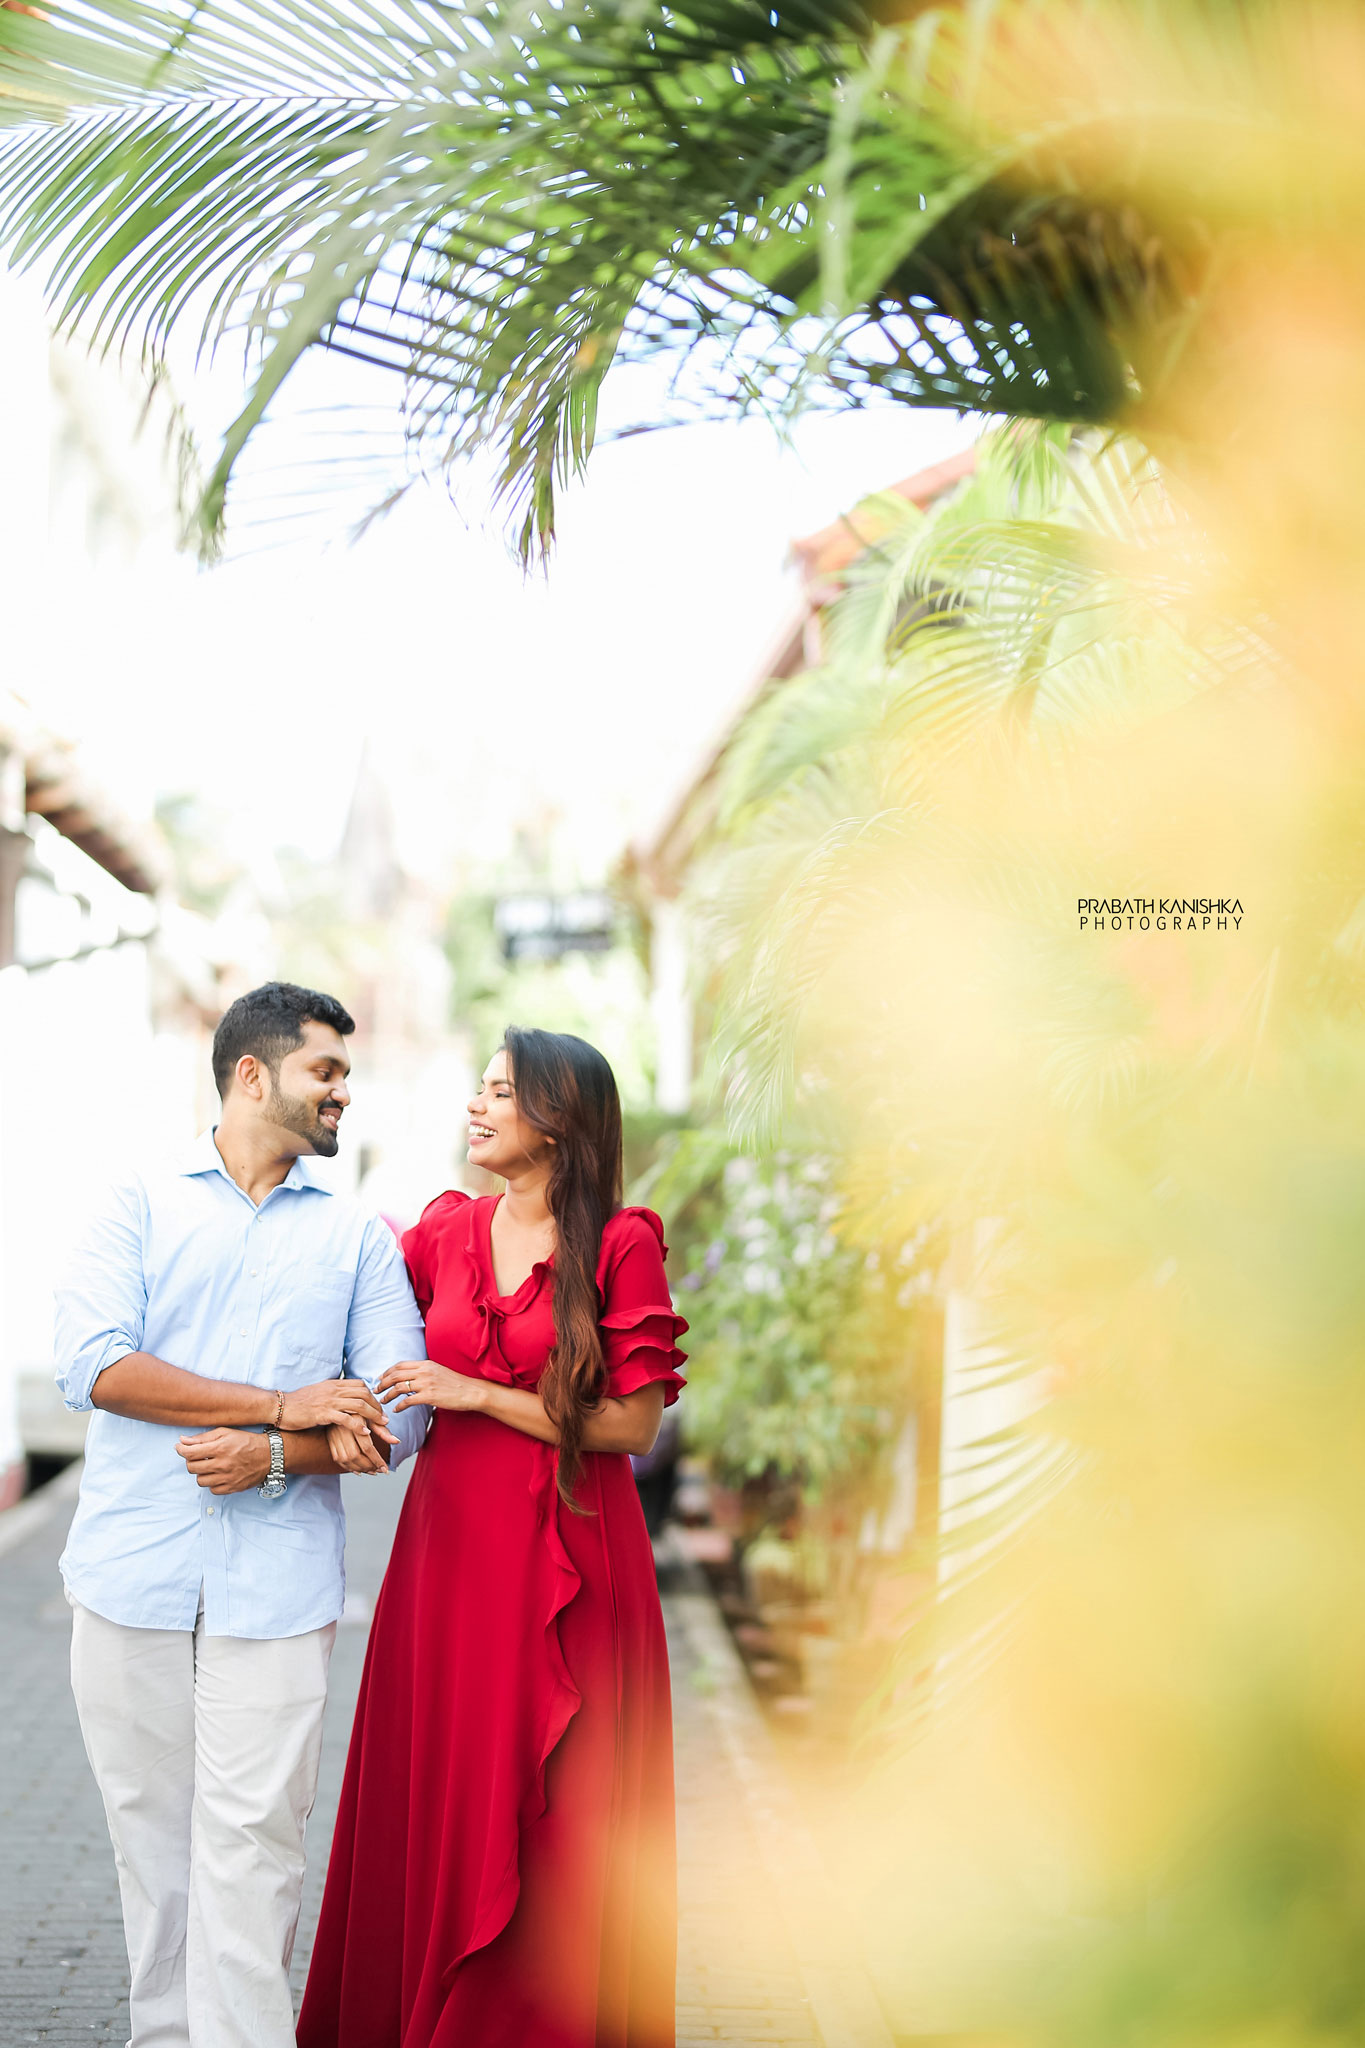 Eranga & Shujeevan - Prabath Kanishka Wedding Photography